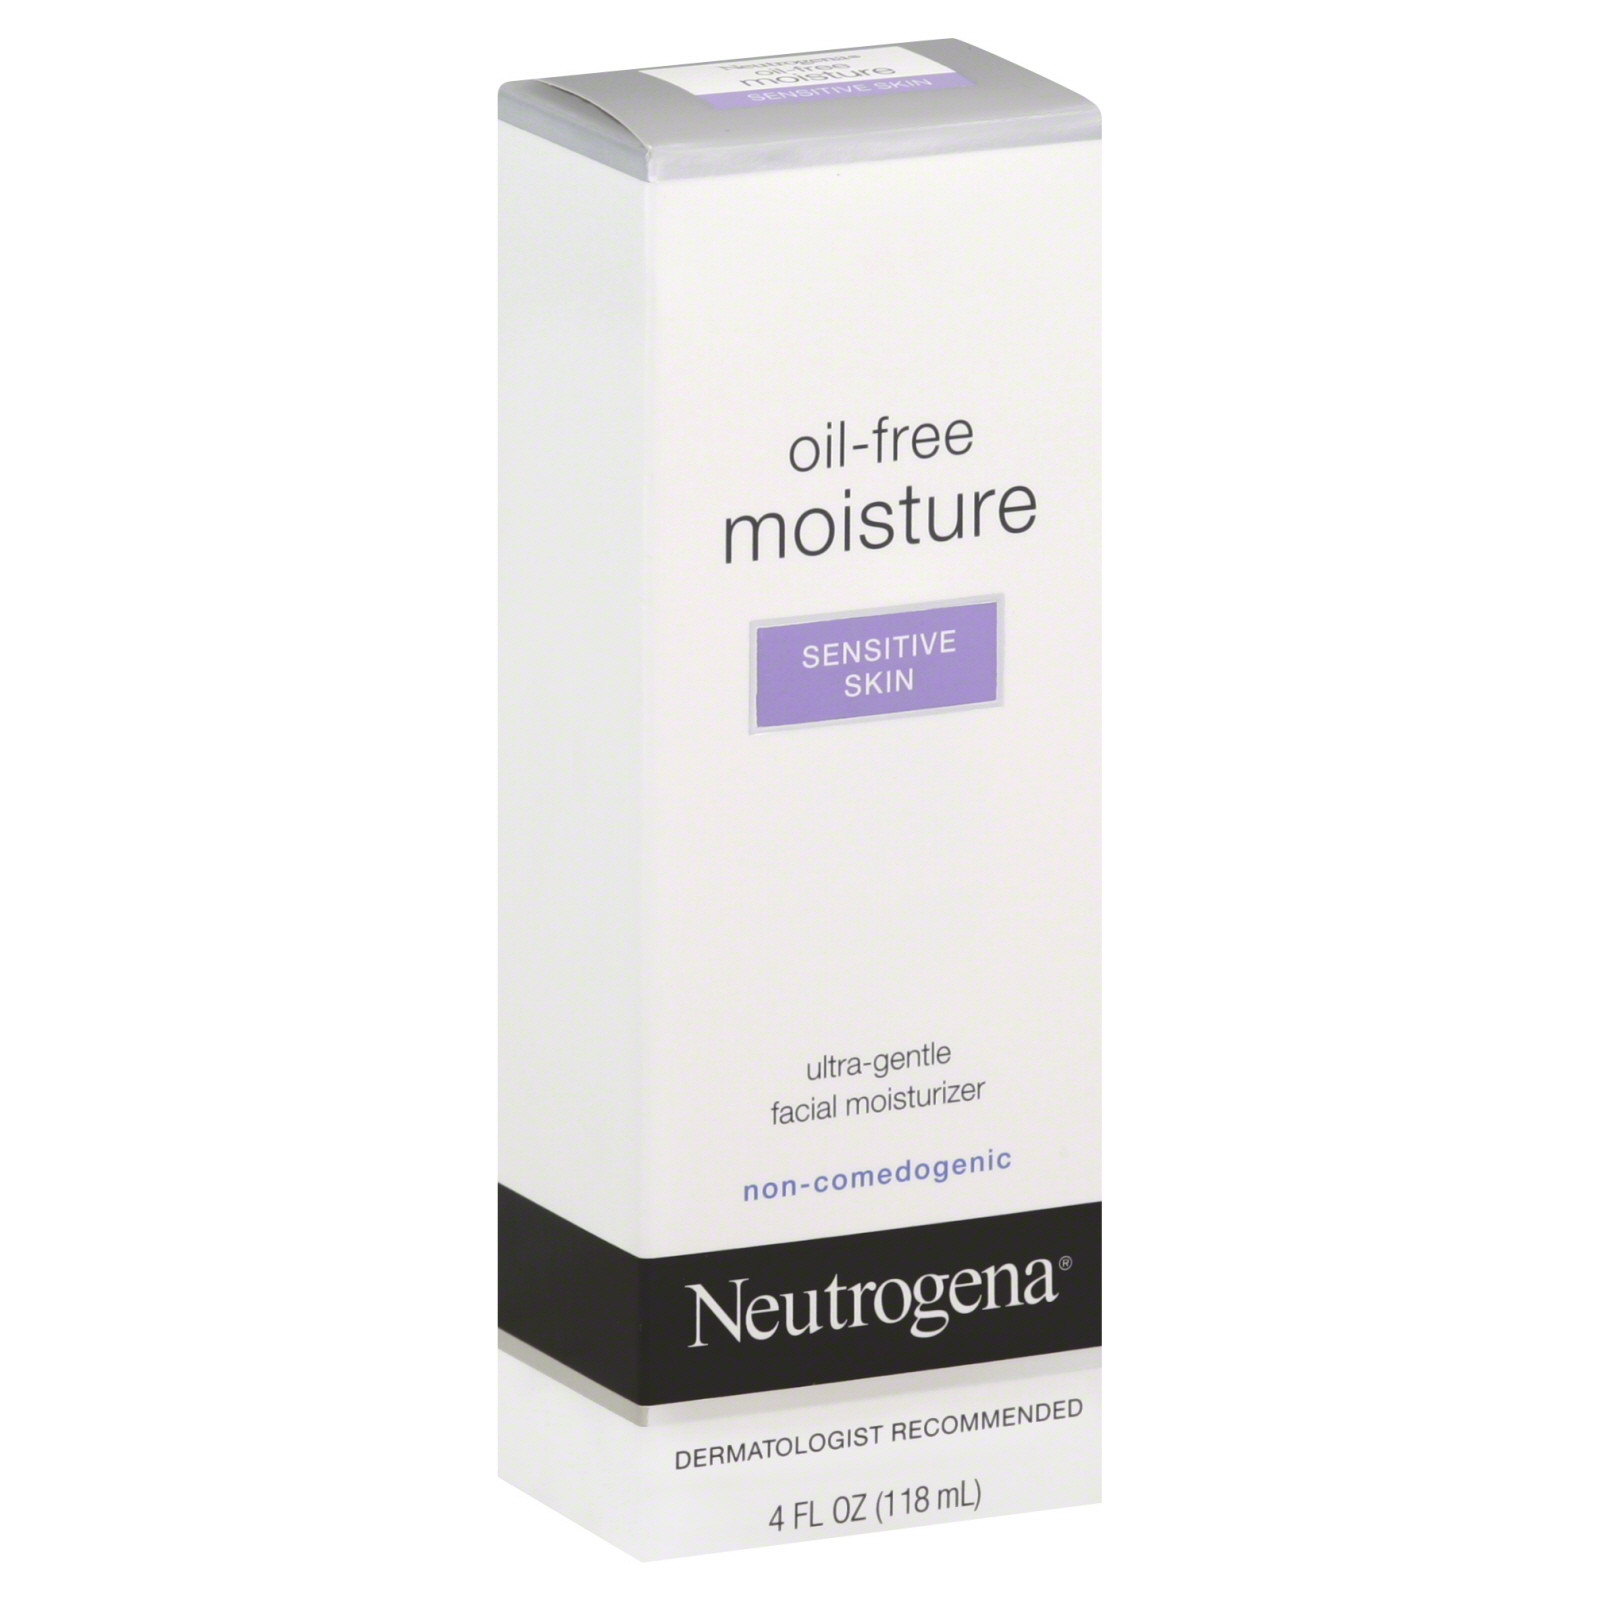 Neutrogena Facial Moisturizer, Oil-Free Moisture, Sensitive Skin, 4 fl oz (118 ml)